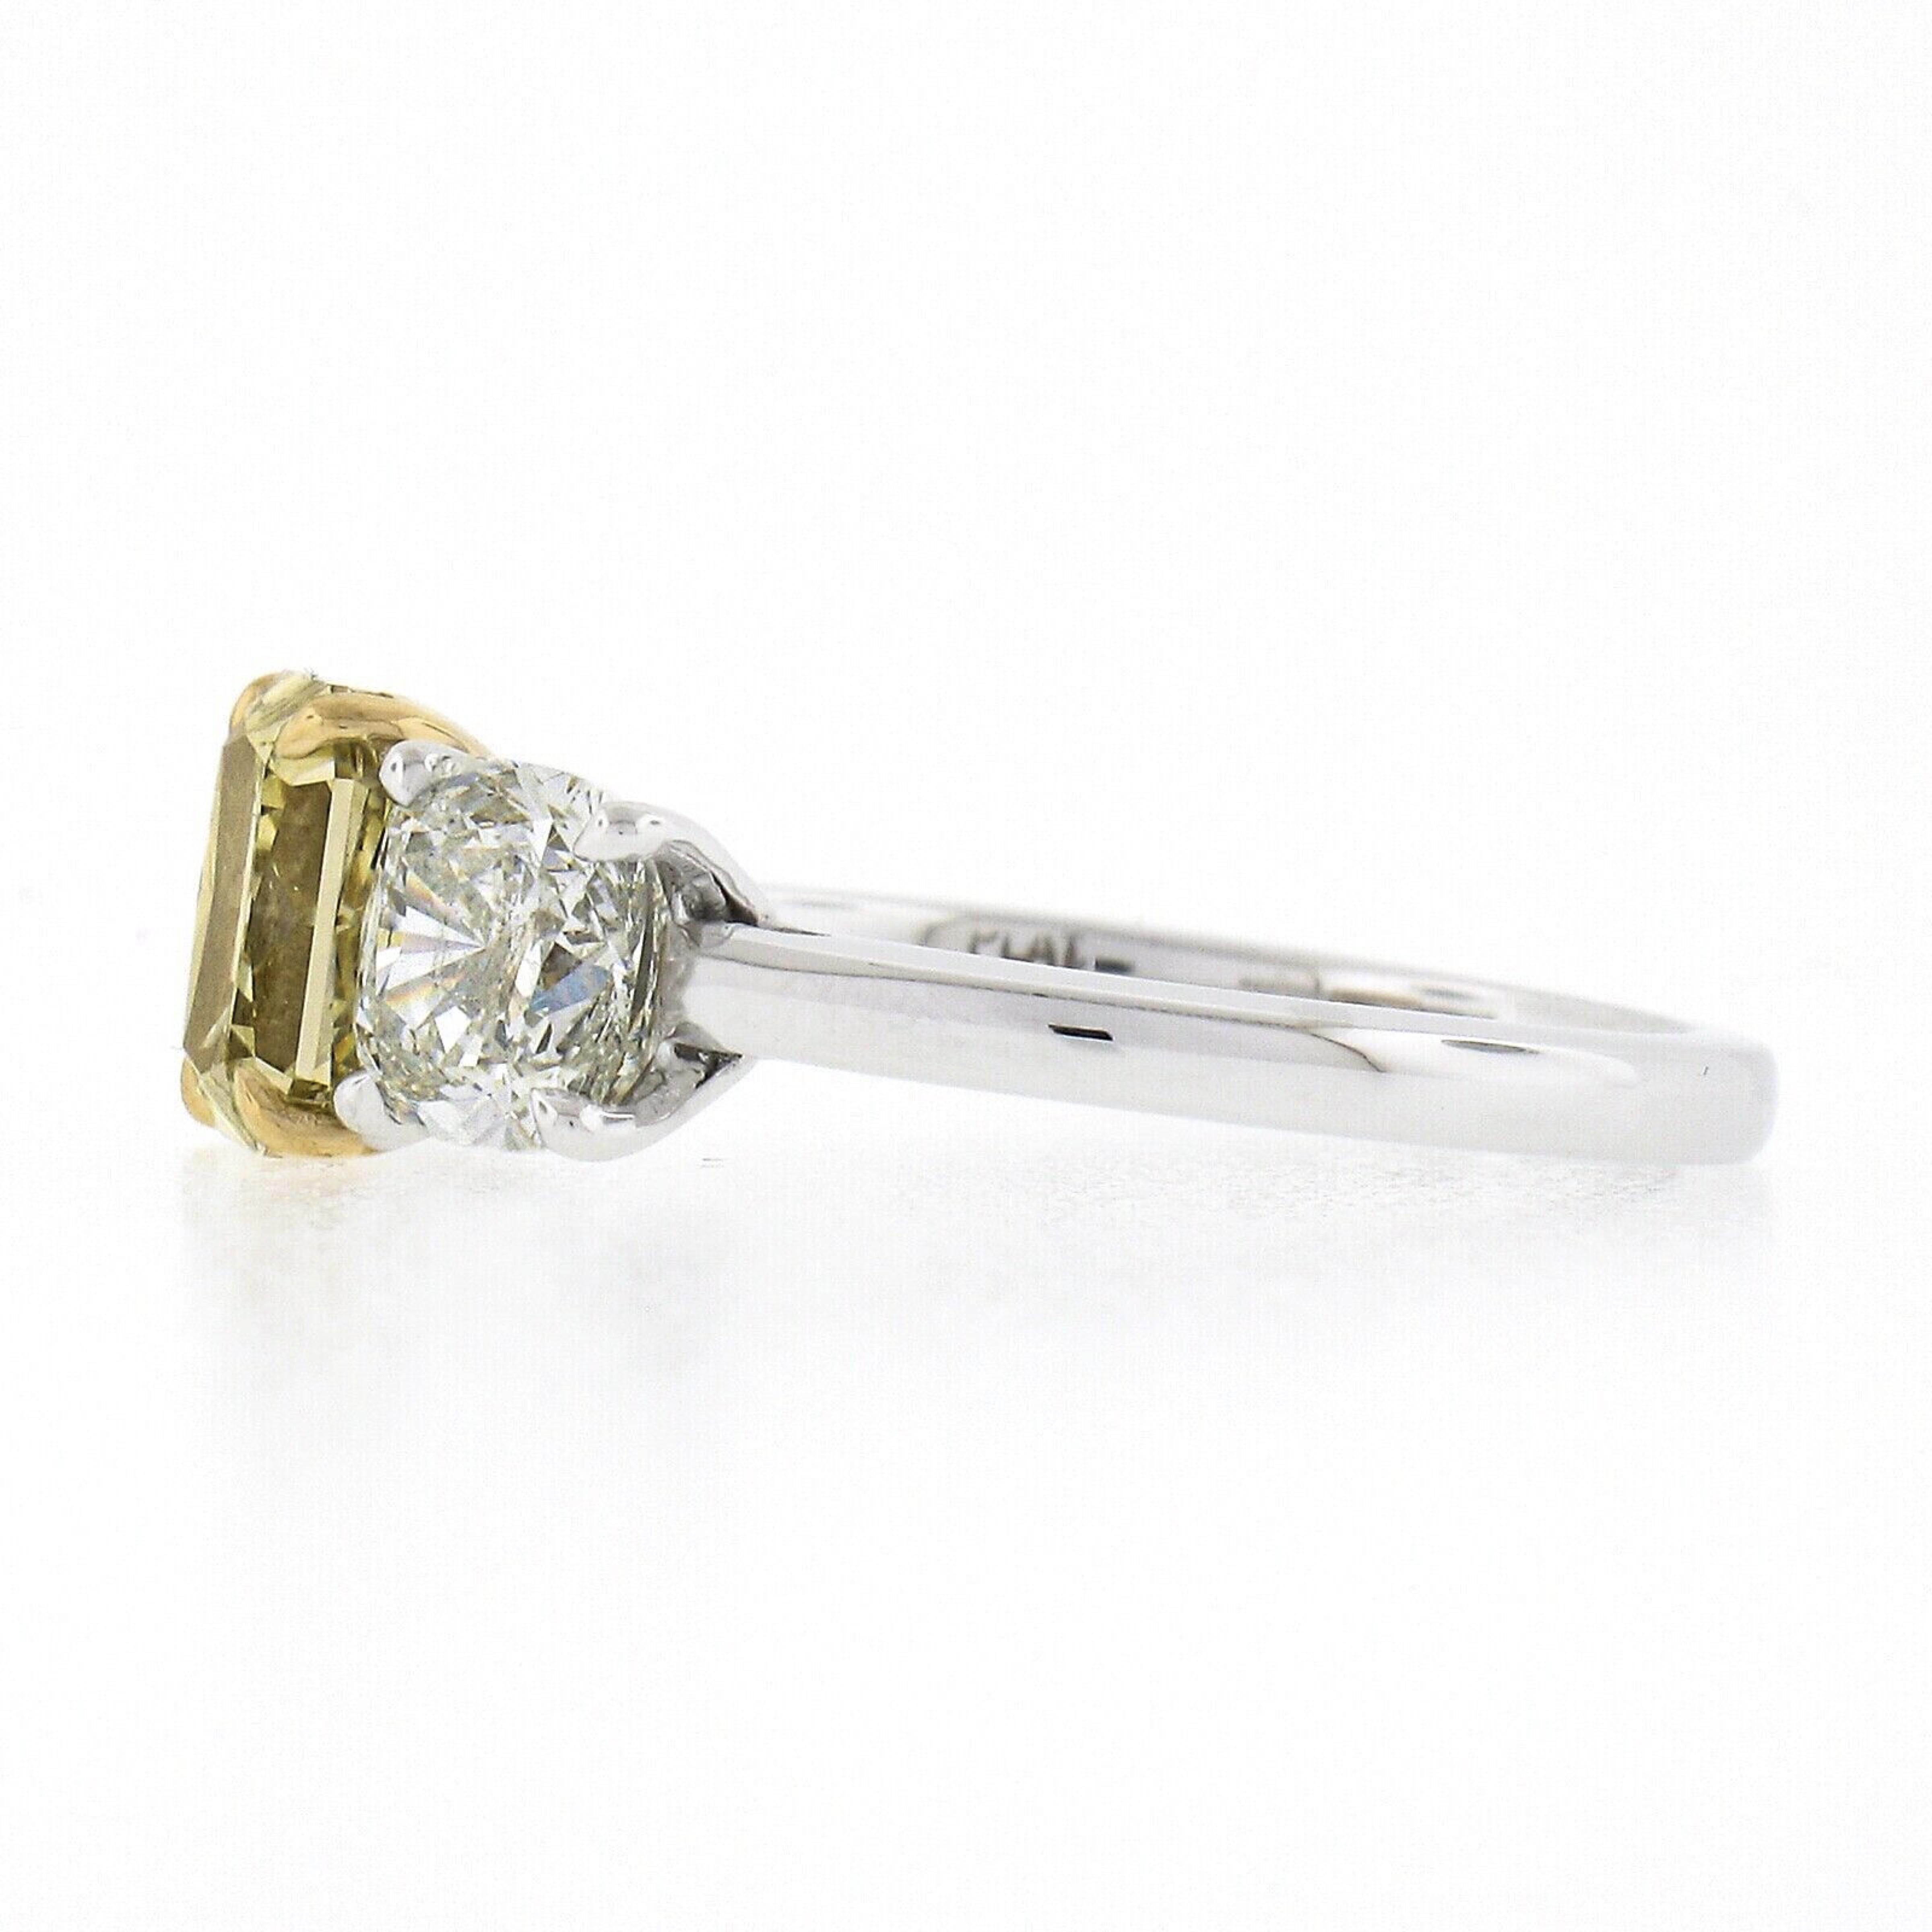 Platinum 18k Gold 3.47ct GIA Fancy Yellow & White Cushion Diamond 3 Stone Ring For Sale 1